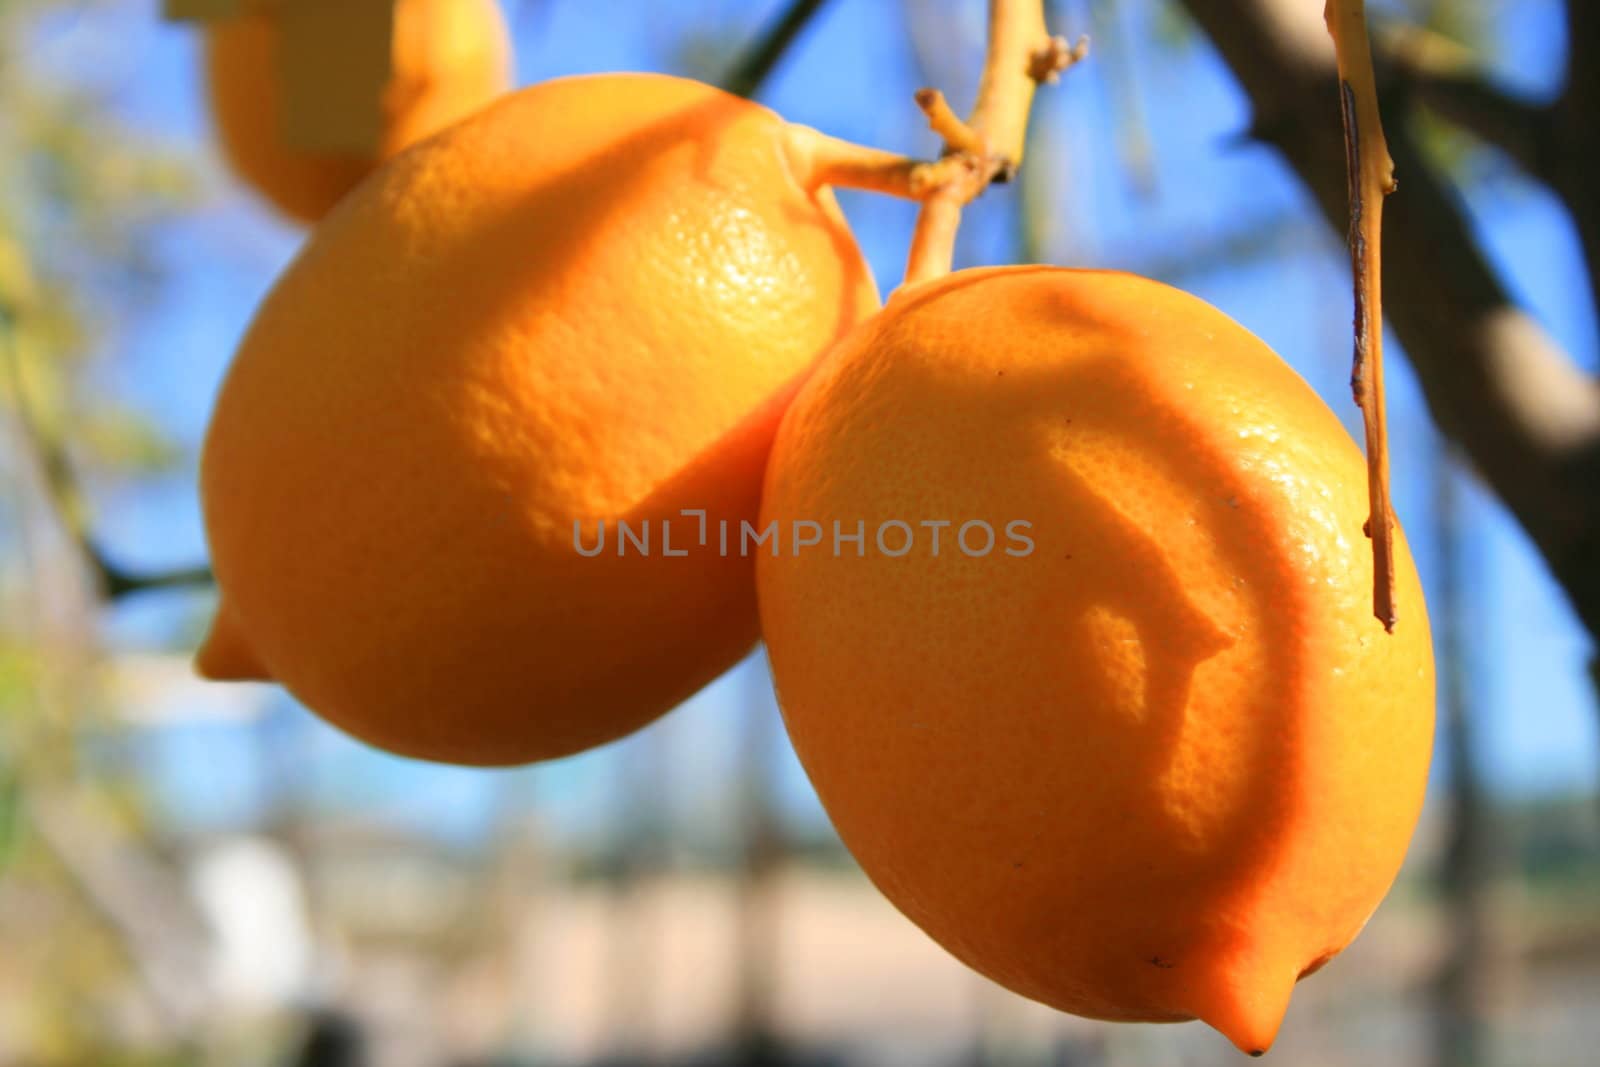 Lemon tree branch with fresh ripe lemons.